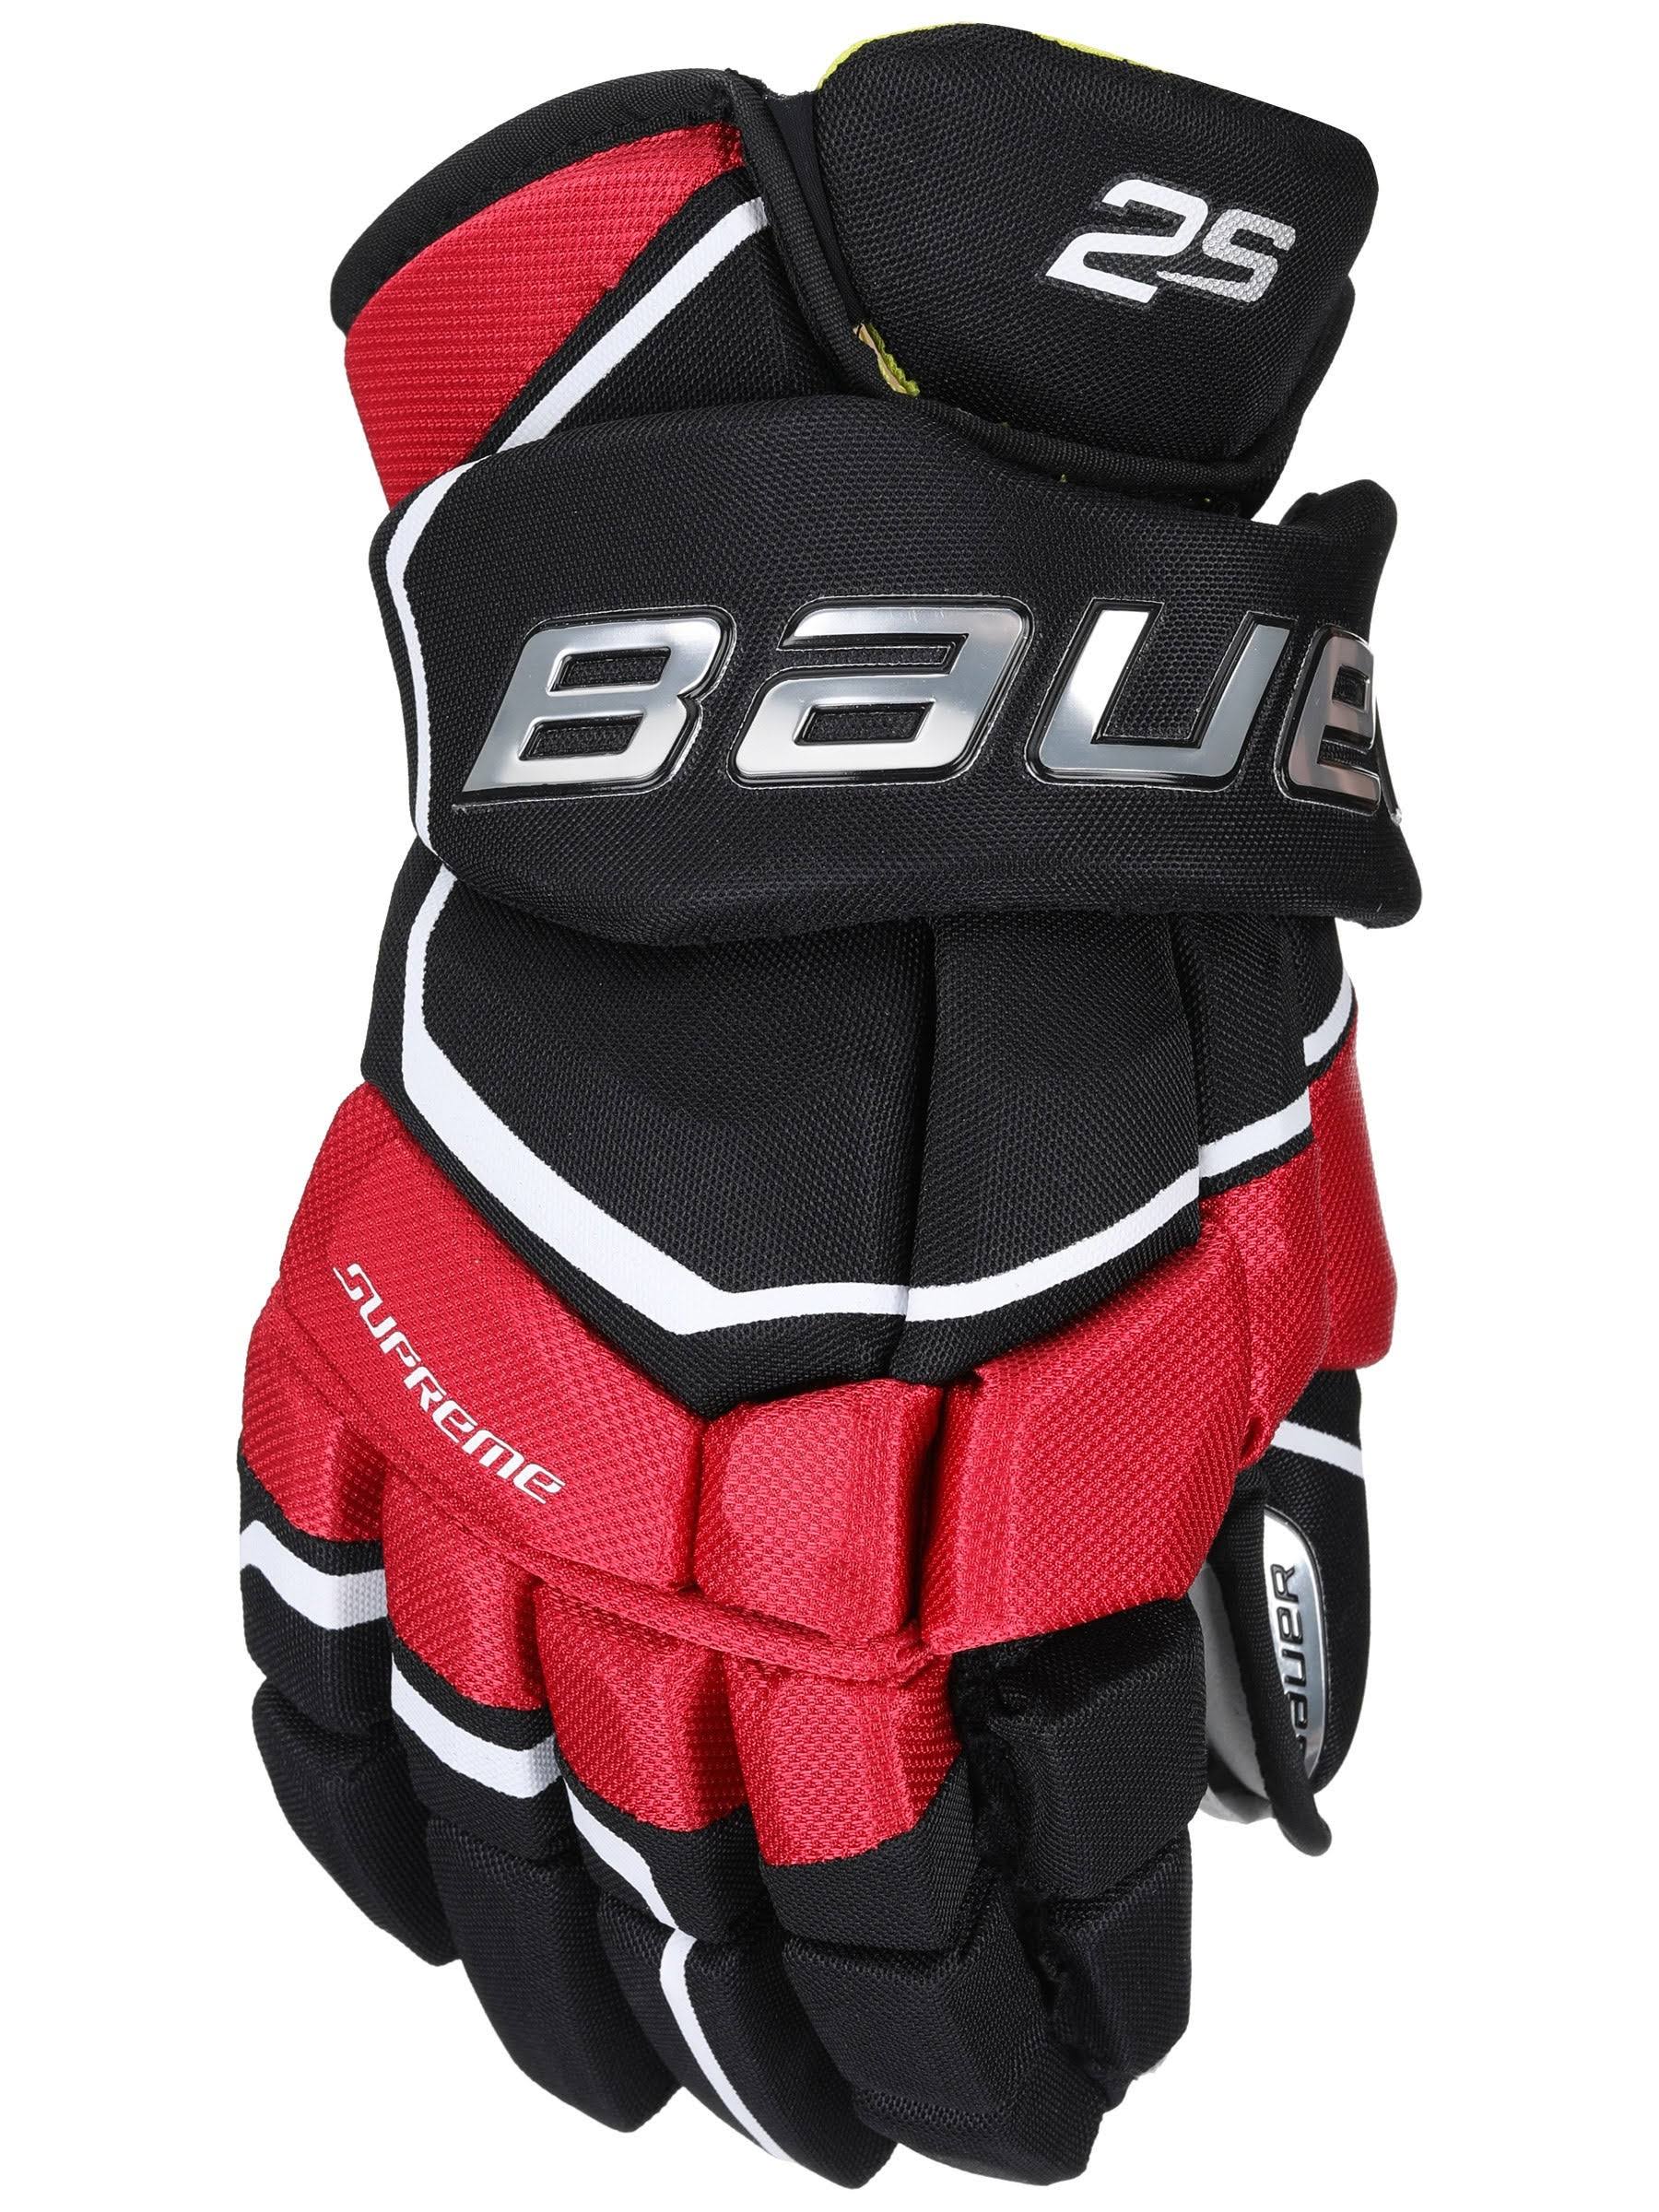 Bauer Supreme 2S Hockey Gloves - Senior - Black/Red - 14.0"